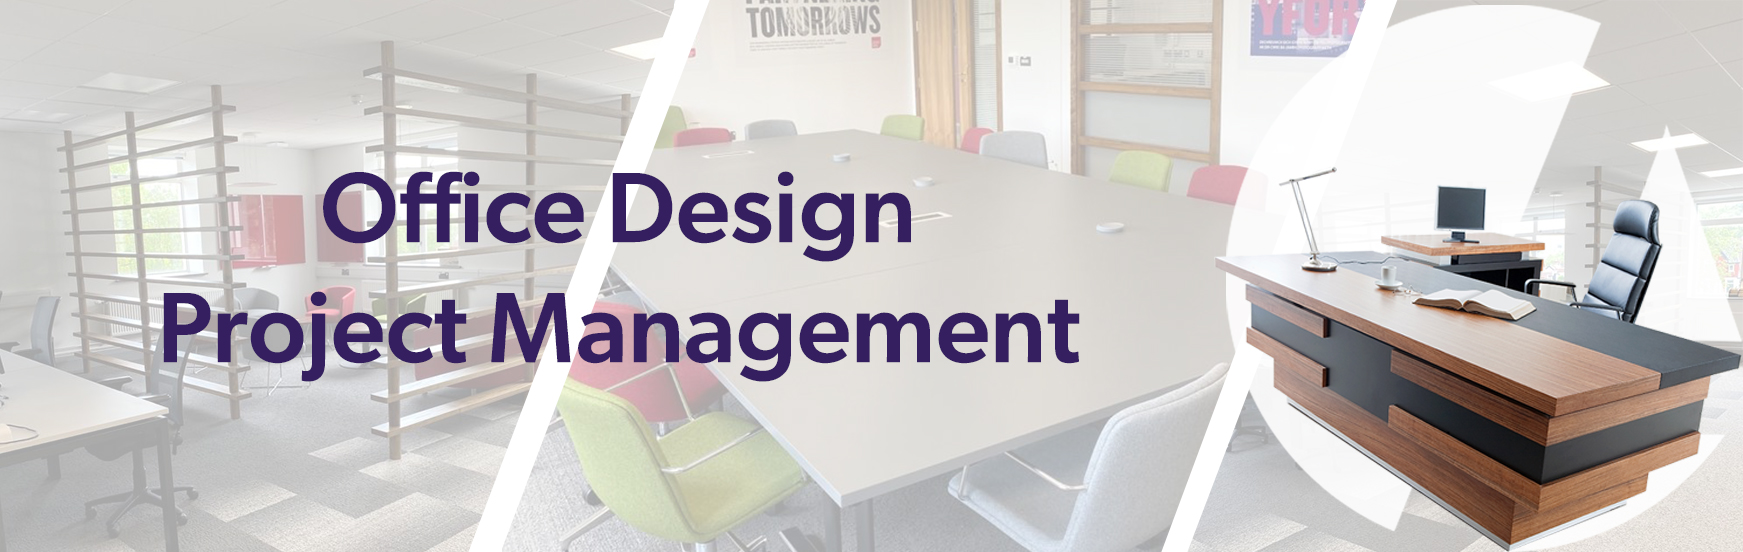 office design project management